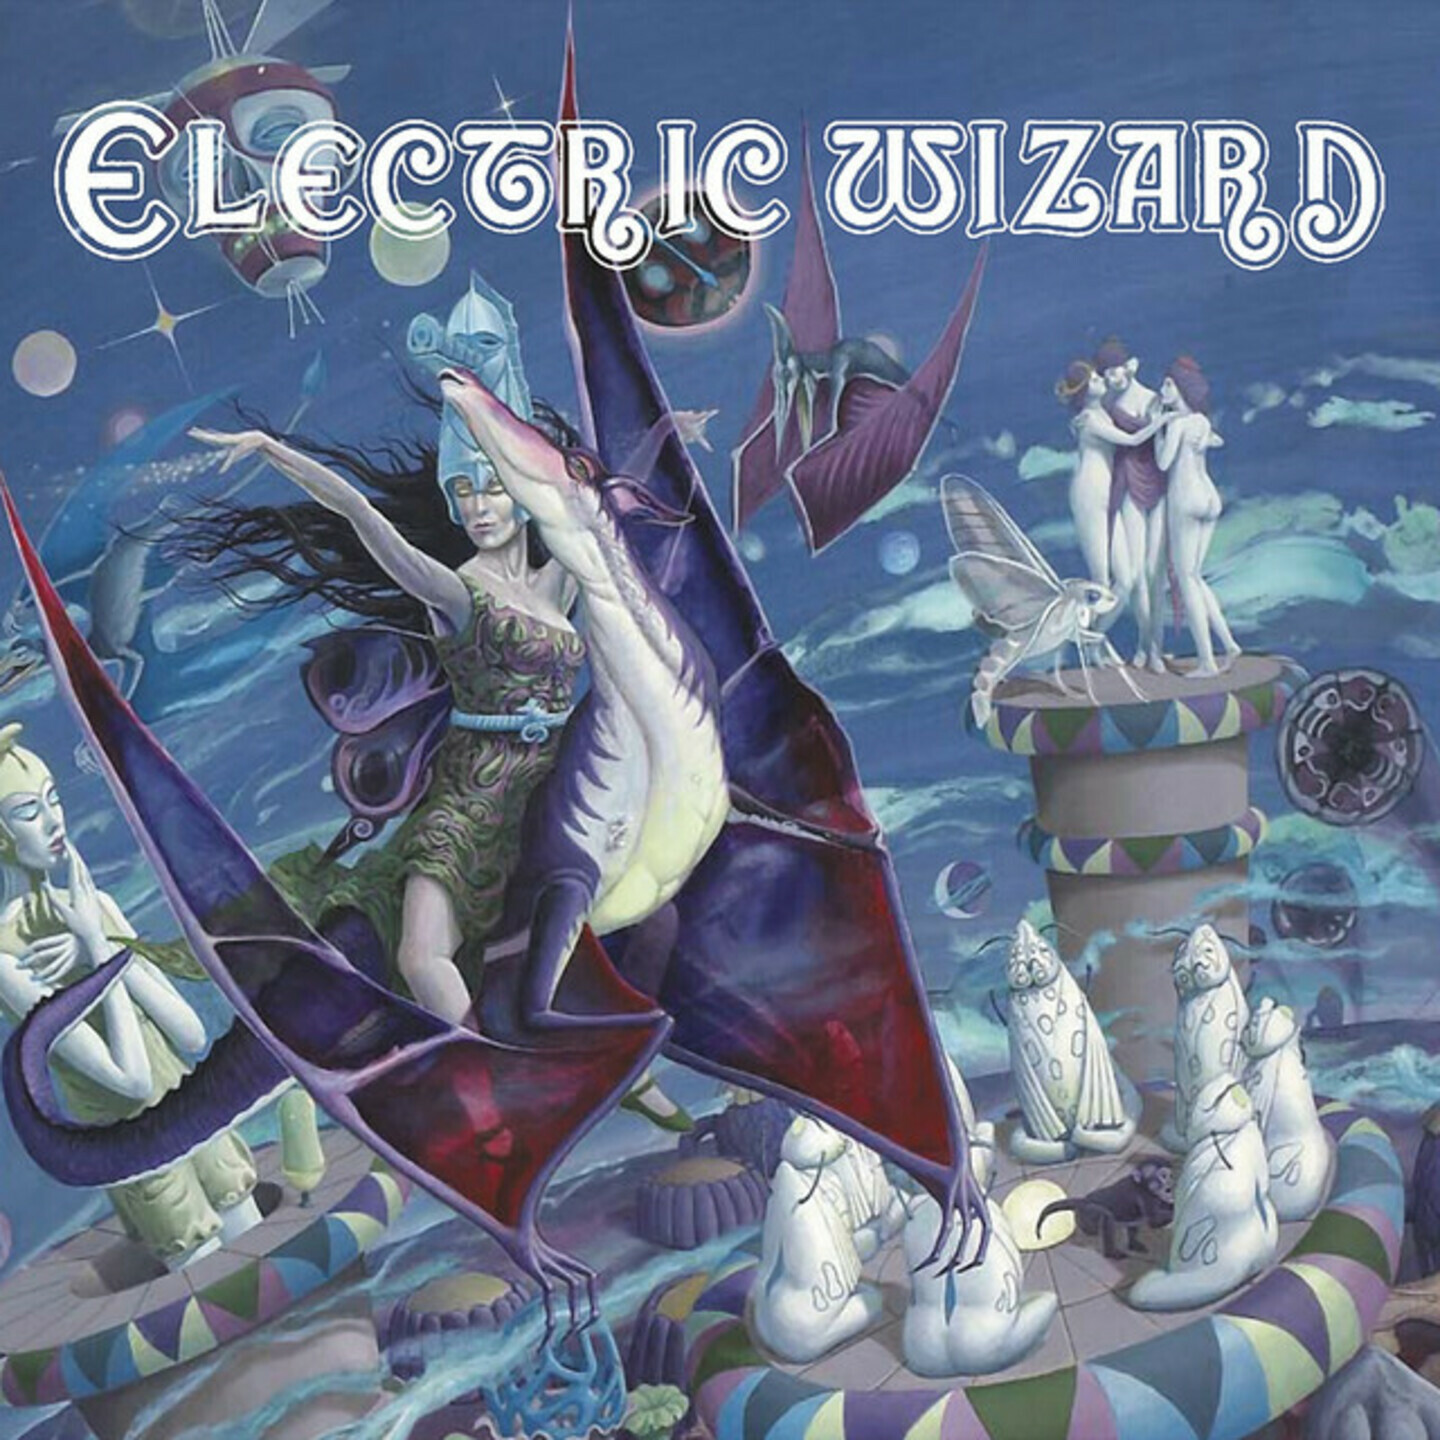 ELECTRIC WIZARD - Electric Wizard LP (Swamp Green vinyl)